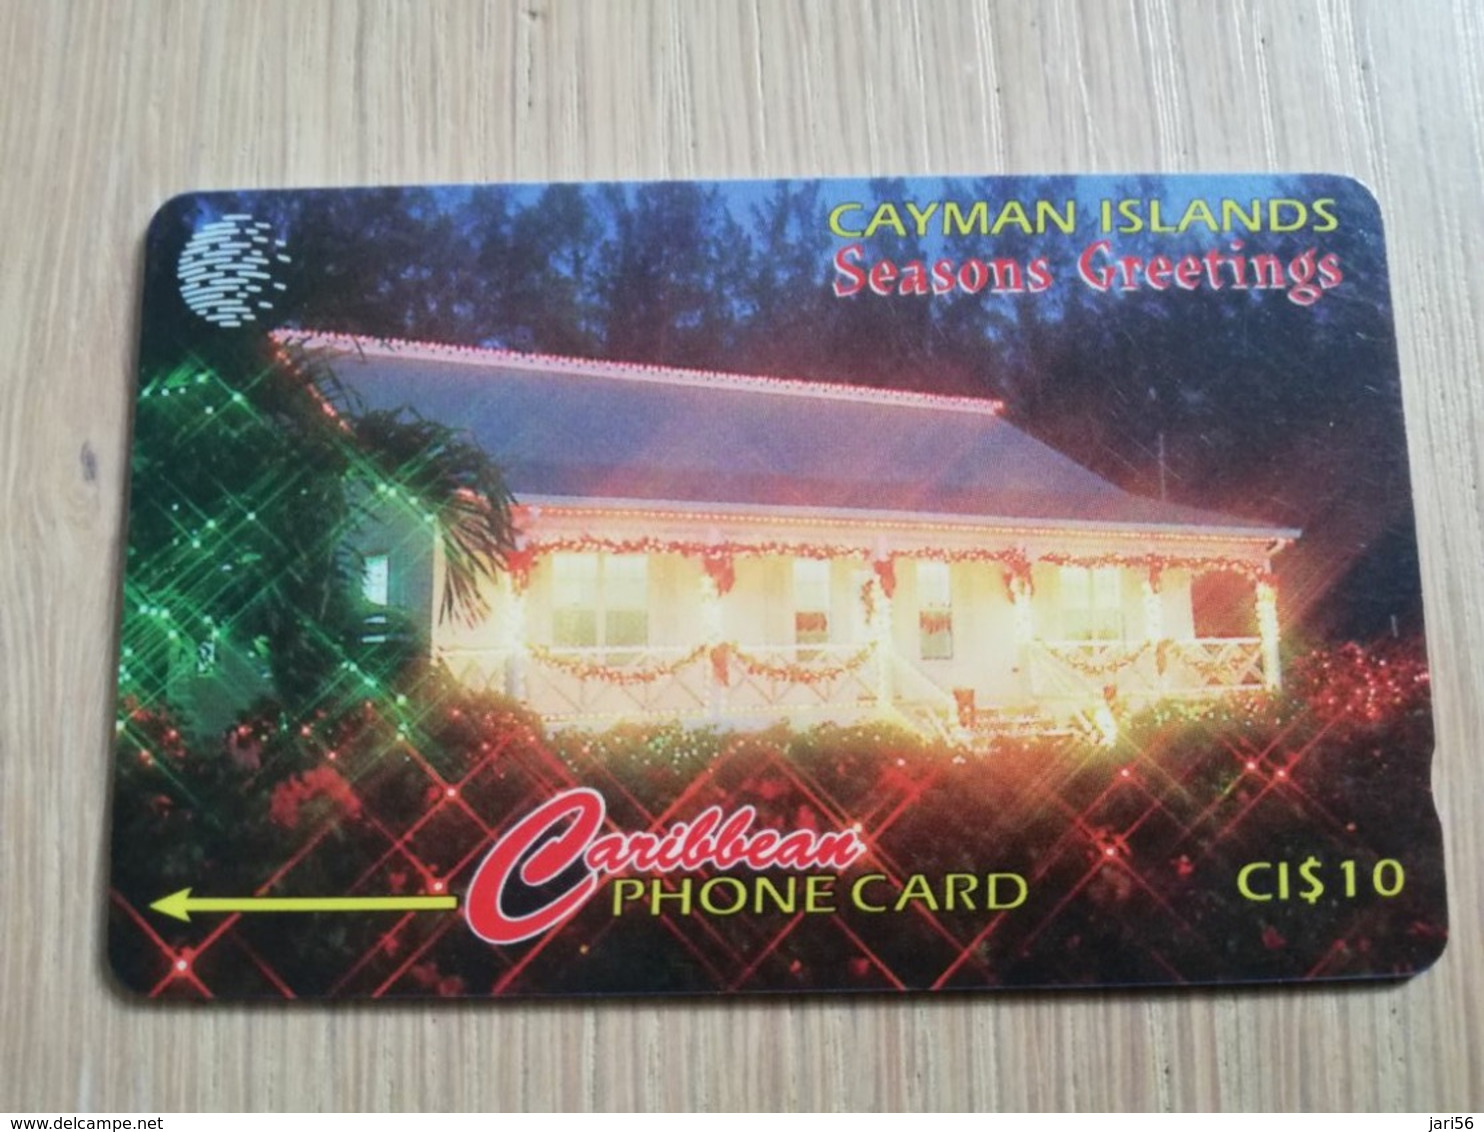 CAYMAN ISLANDS  CI $ 10,-  CAY-189A CONTROL NR 189CCIA  SEASON GREETINGS 1997       Fine Used Card  ** 3123** - Isole Caiman